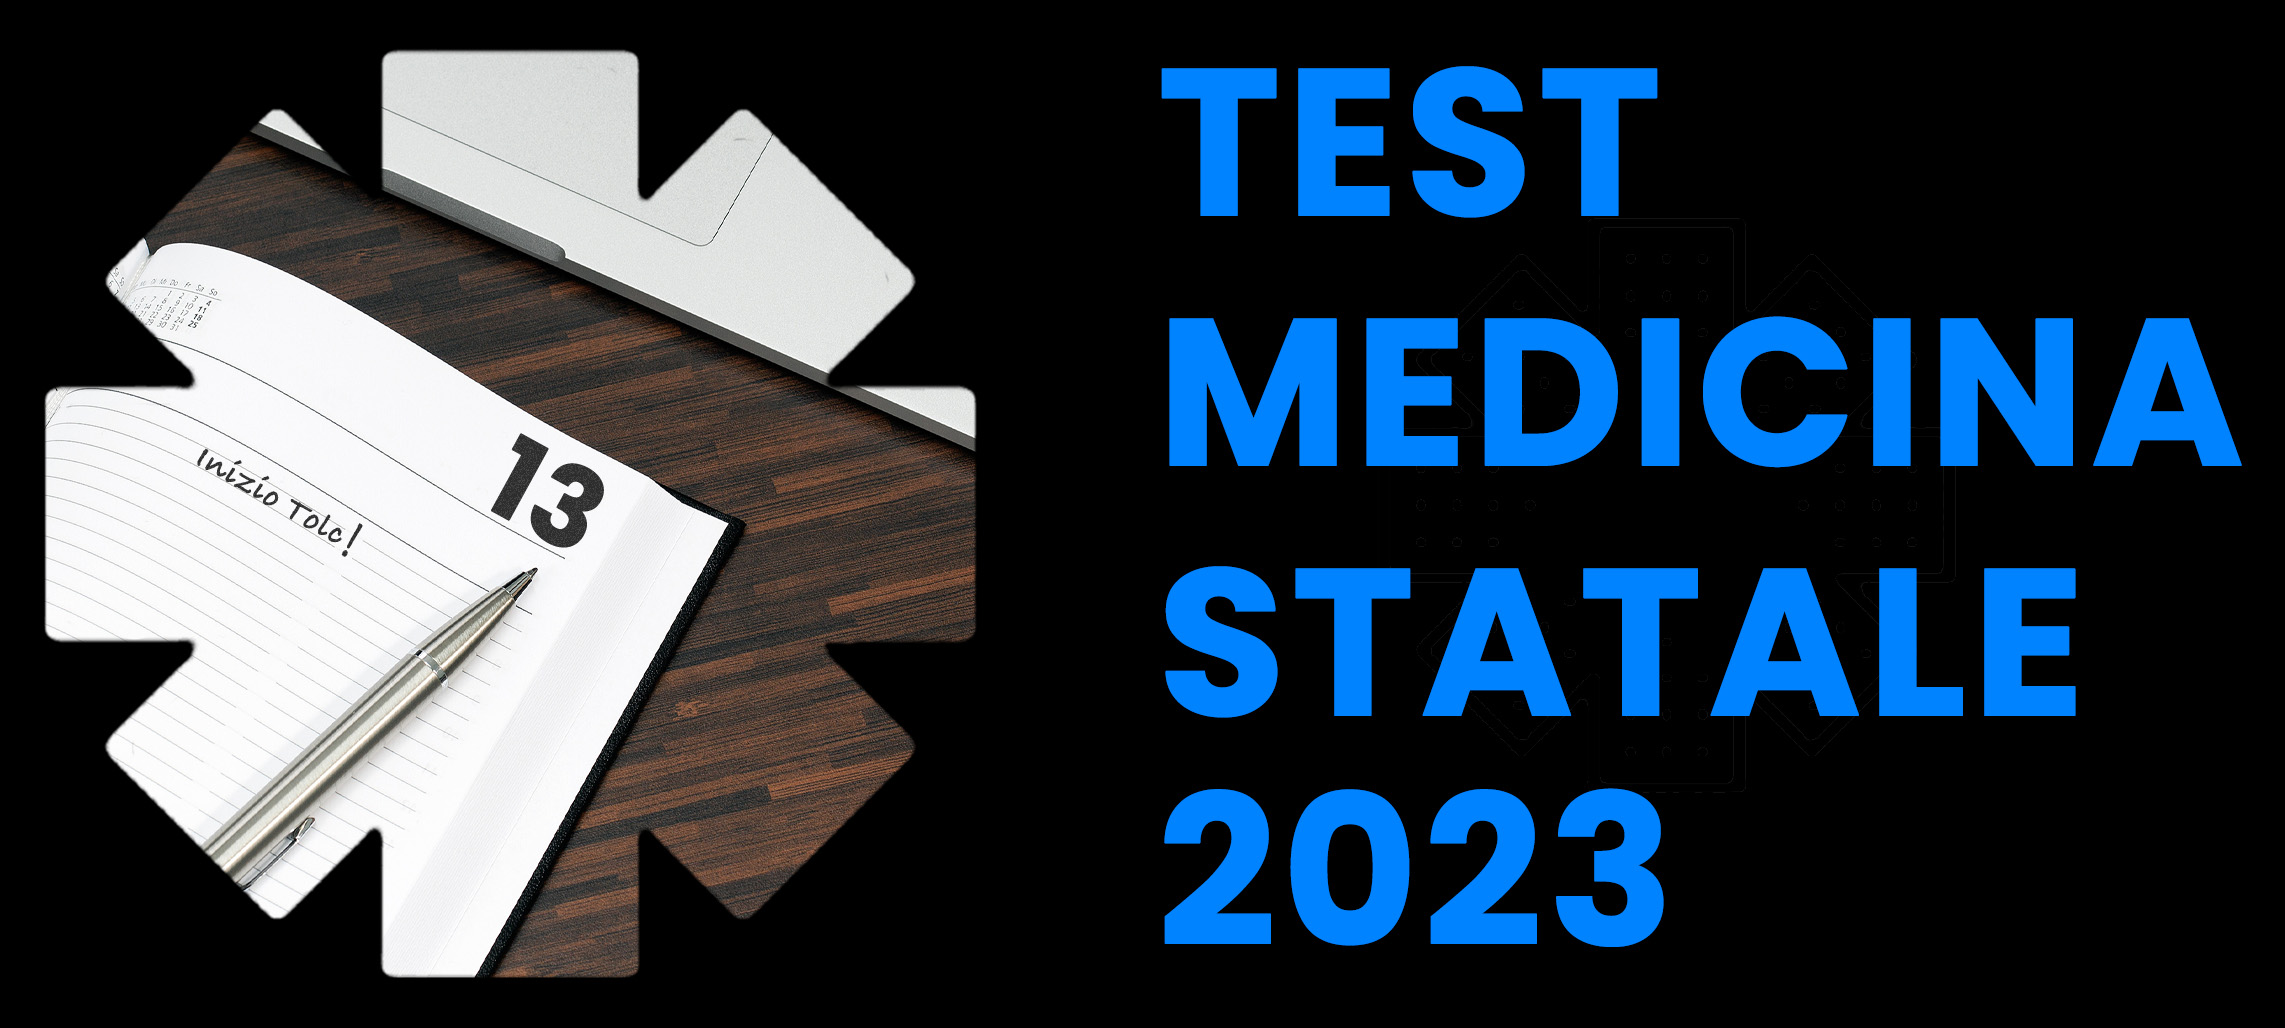 TEST MEDICINA STATALE 2023 - RIEPILOGO E ULTIME NEWS